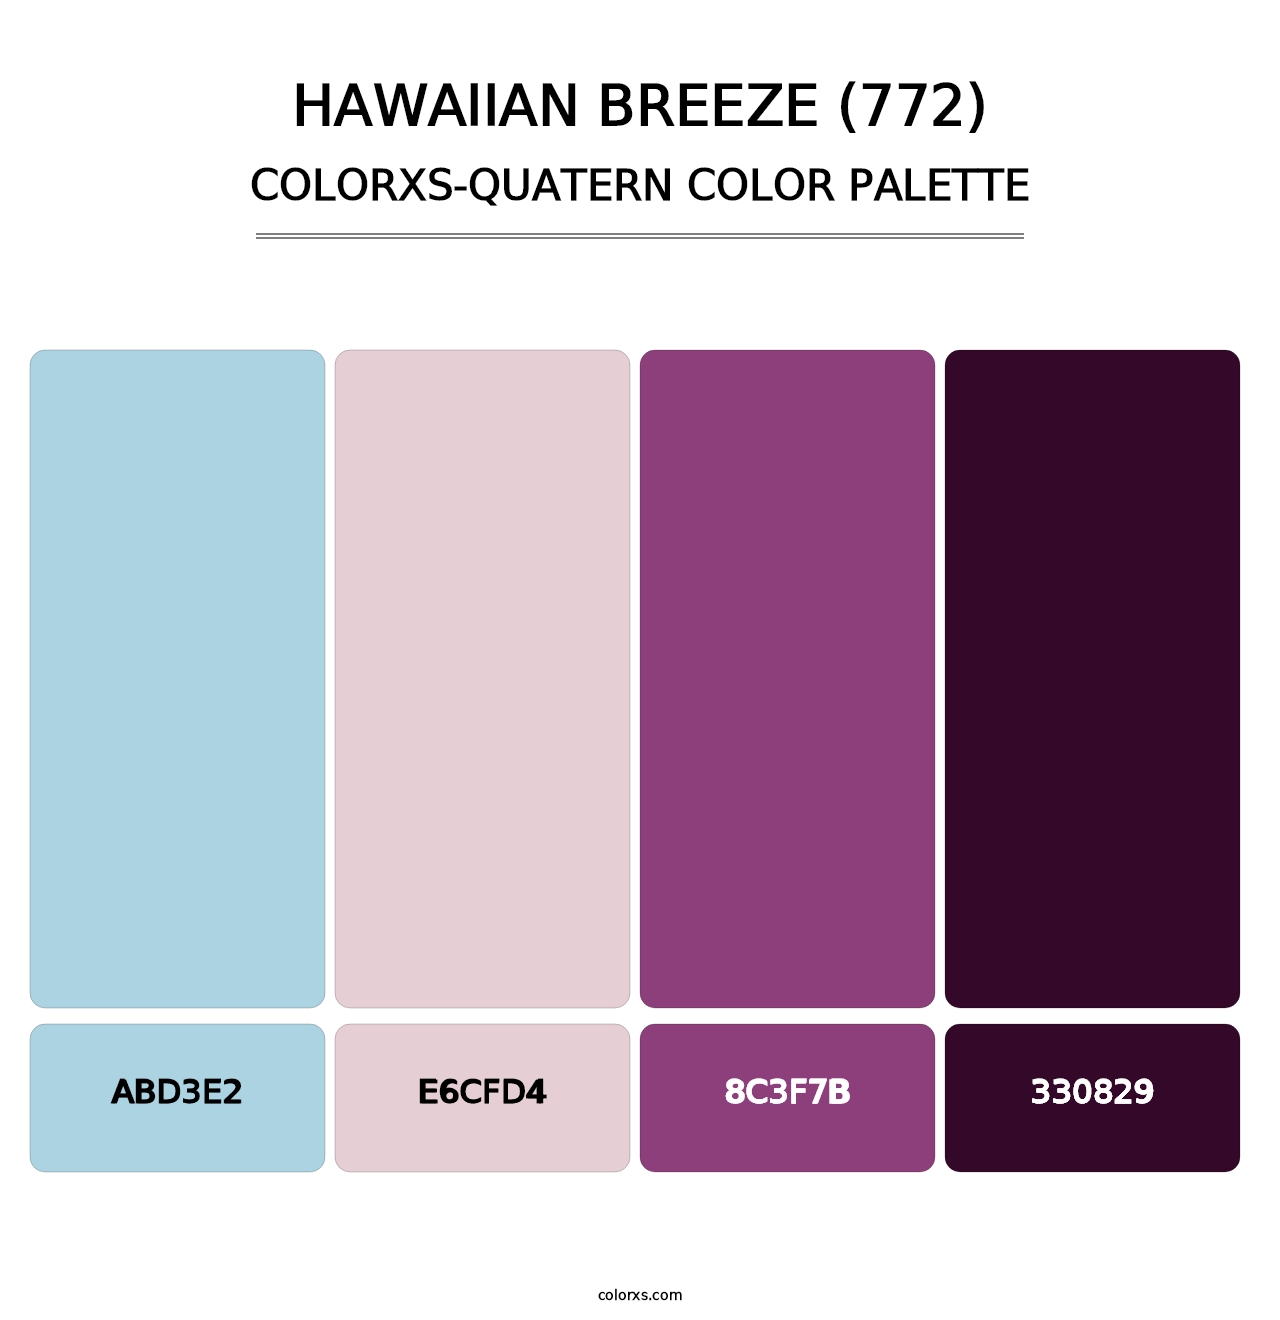 Hawaiian Breeze (772) - Colorxs Quatern Palette